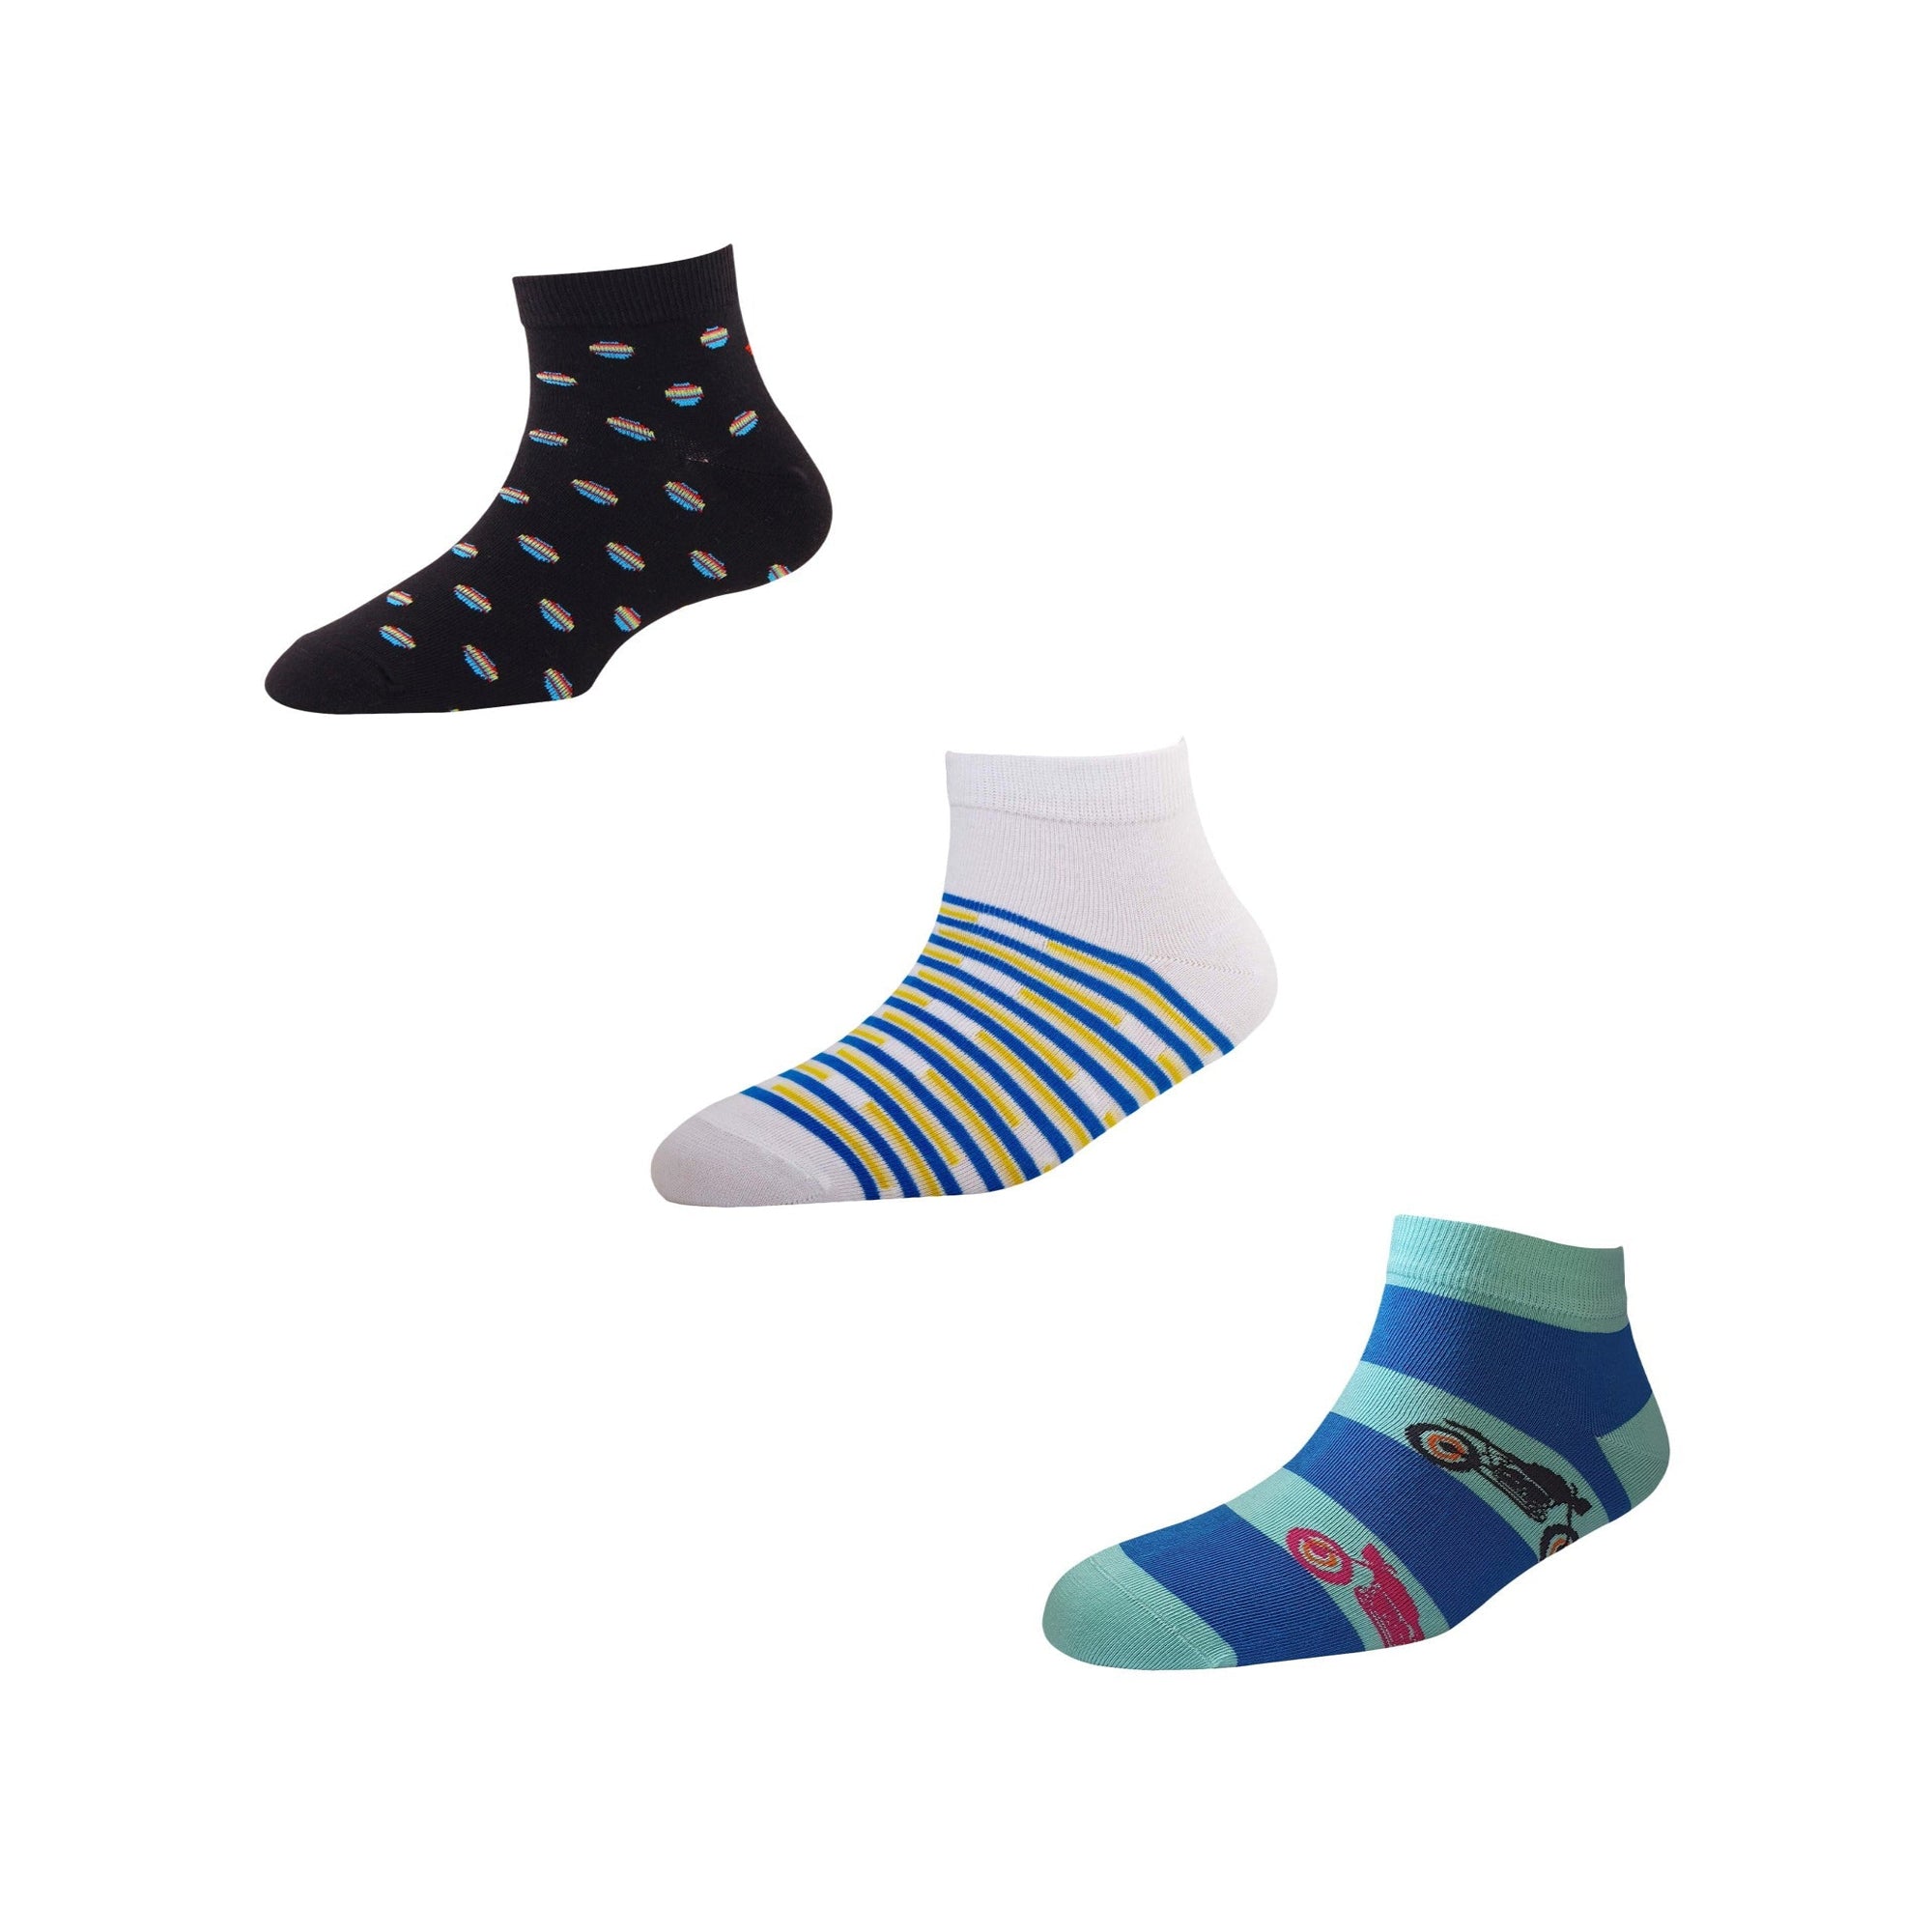 Men's AL07 Pack of 3 Cotton Fashion Ankle Socks